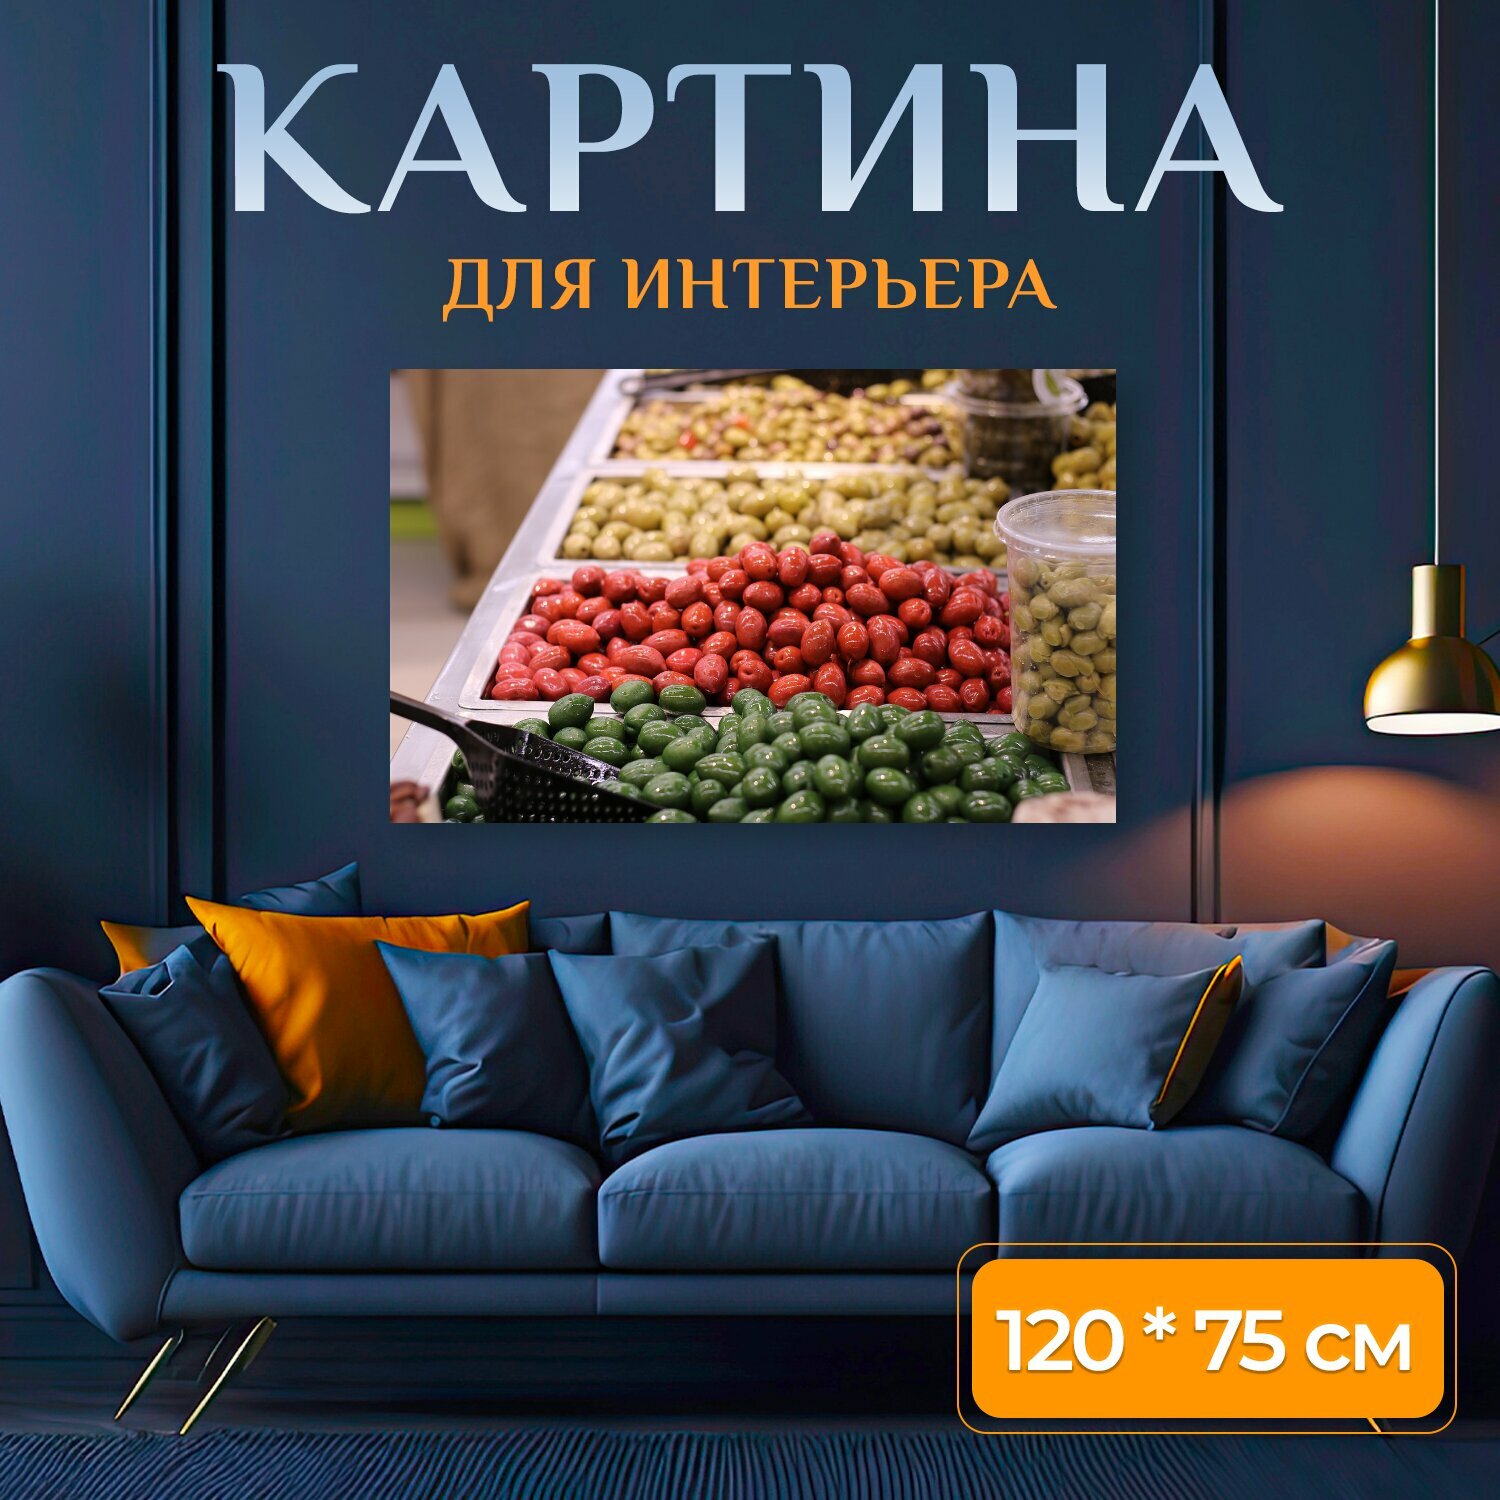 Картина на холсте "Еда, оливки, средиземное море" на подрамнике 120х75 см. для интерьера